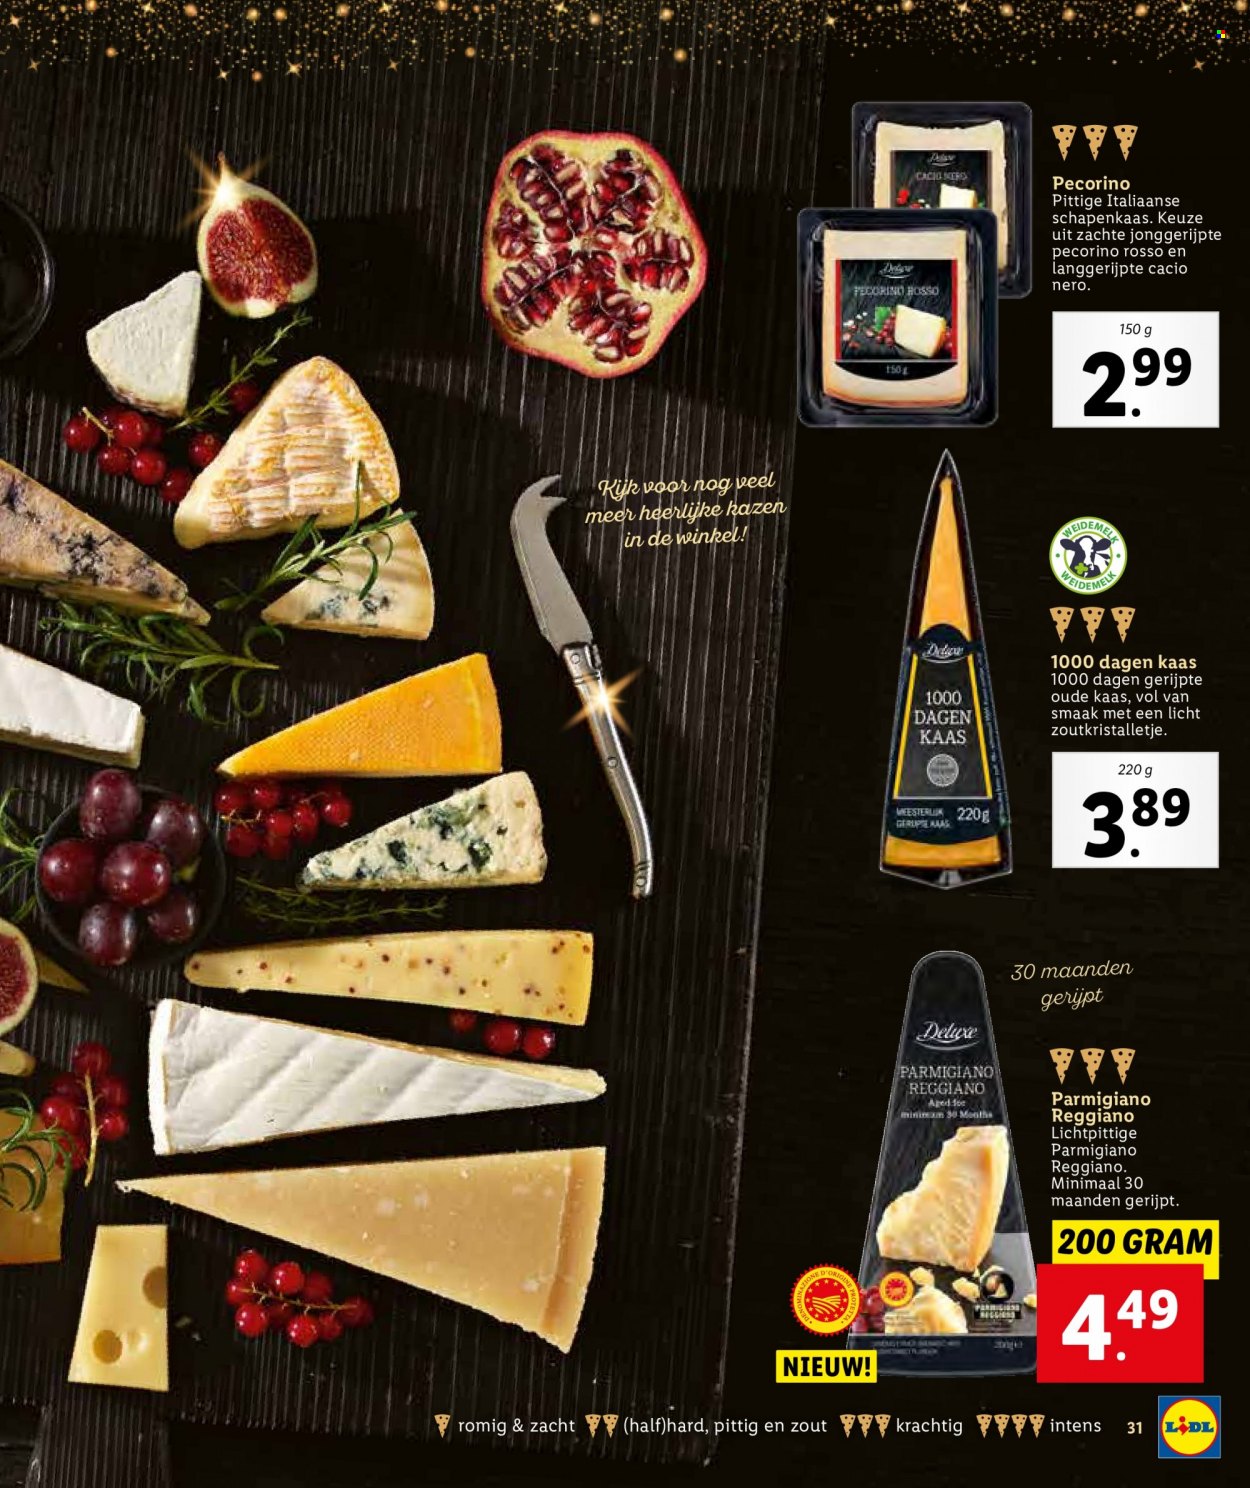 thumbnail - Lidl-aanbieding -  producten in de aanbieding - kaas, oude kaas, Pecorino. Pagina 31.